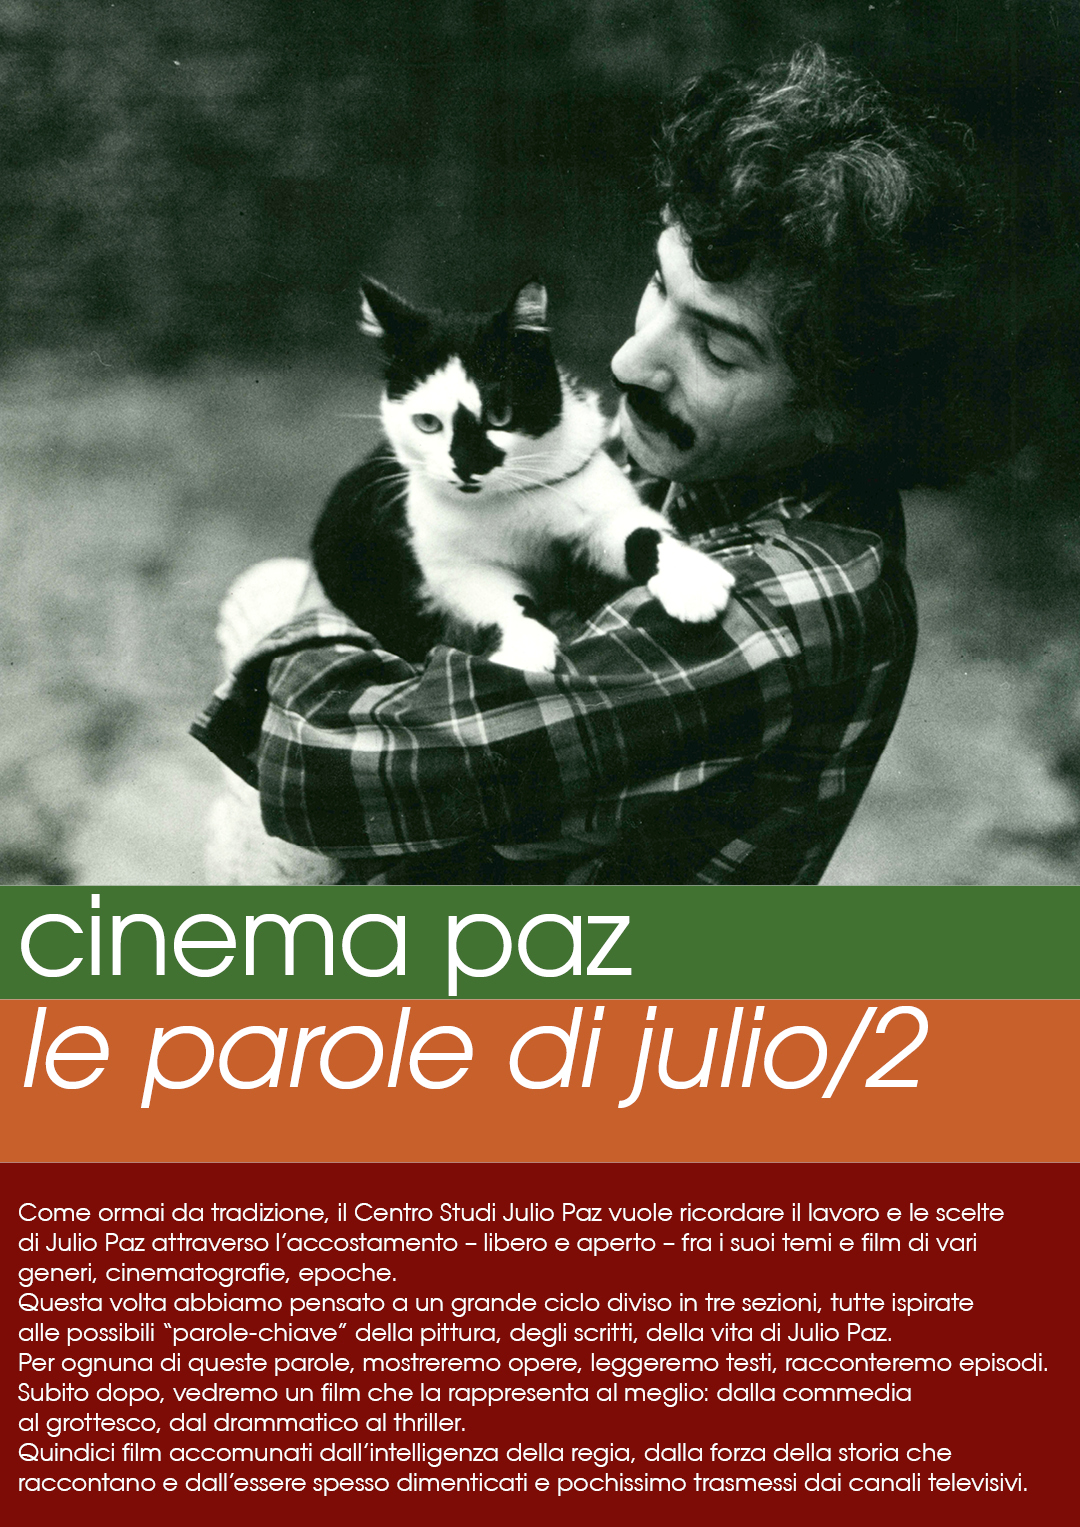 Centro studi Julio Paz Cinema Paz Enrico Delitala